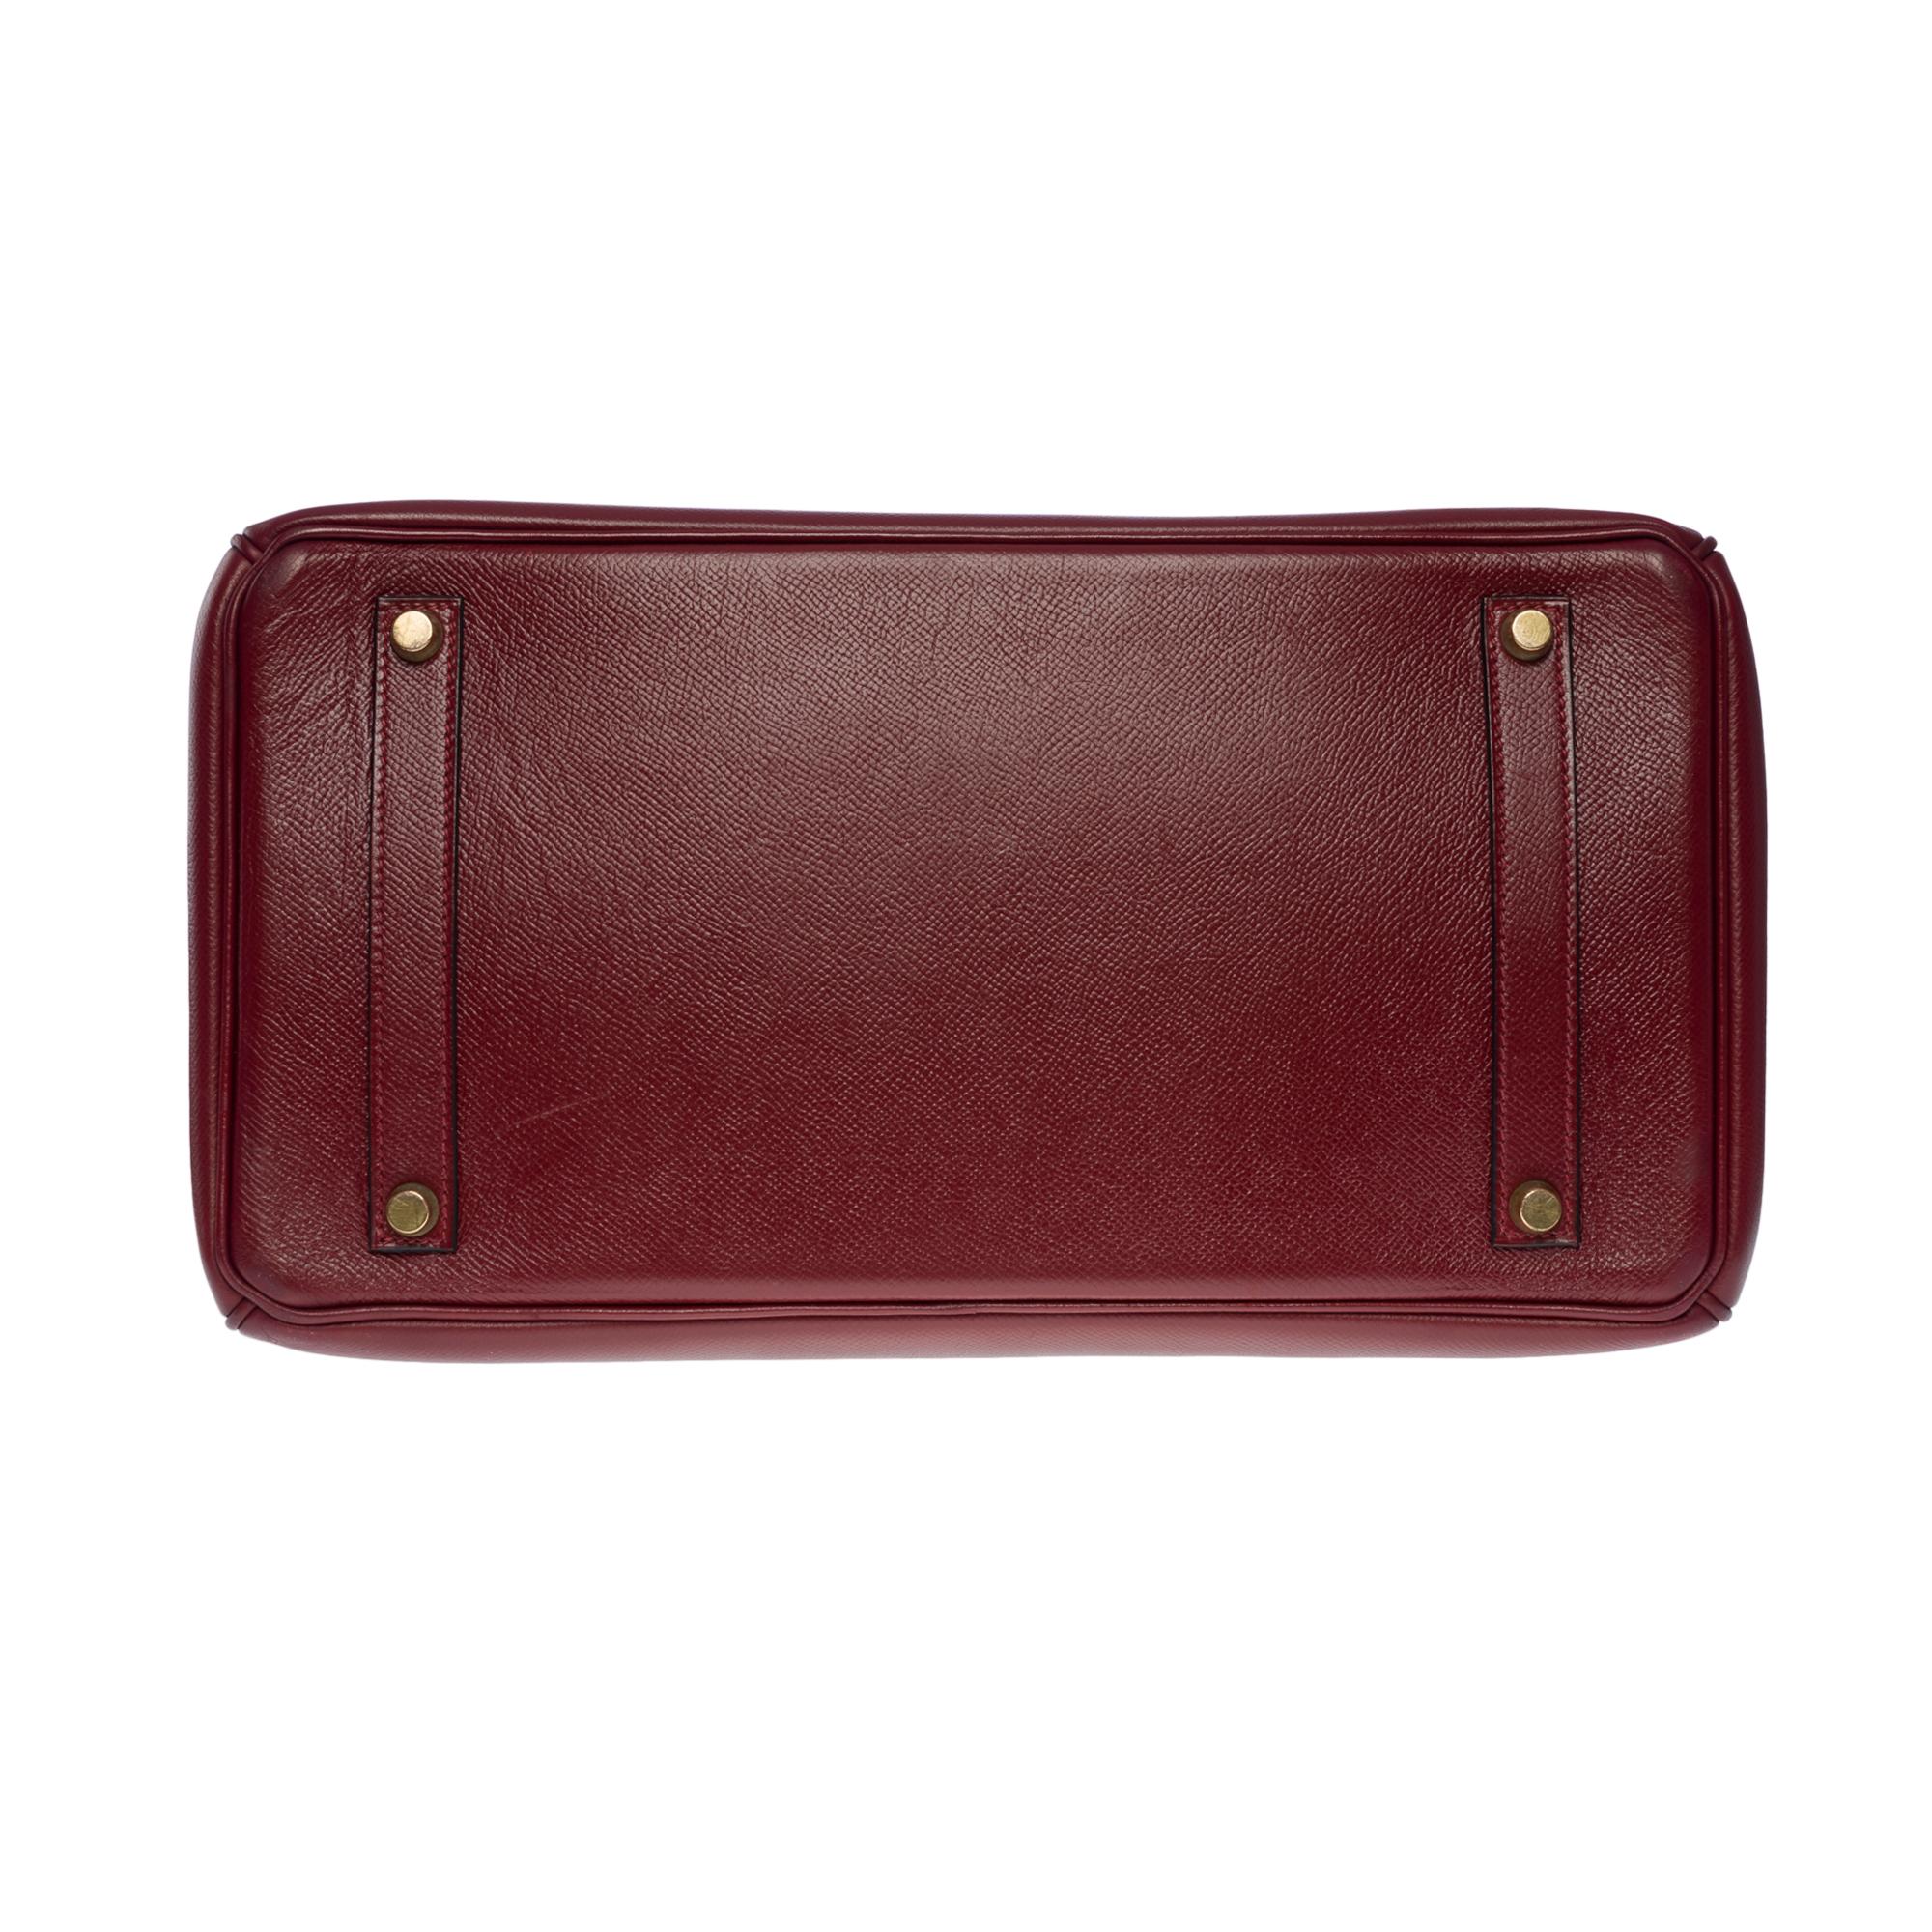 Stunning Hermès Birkin 35 handbag in Rouge H (Burgundy) epsom leather, GHW 5